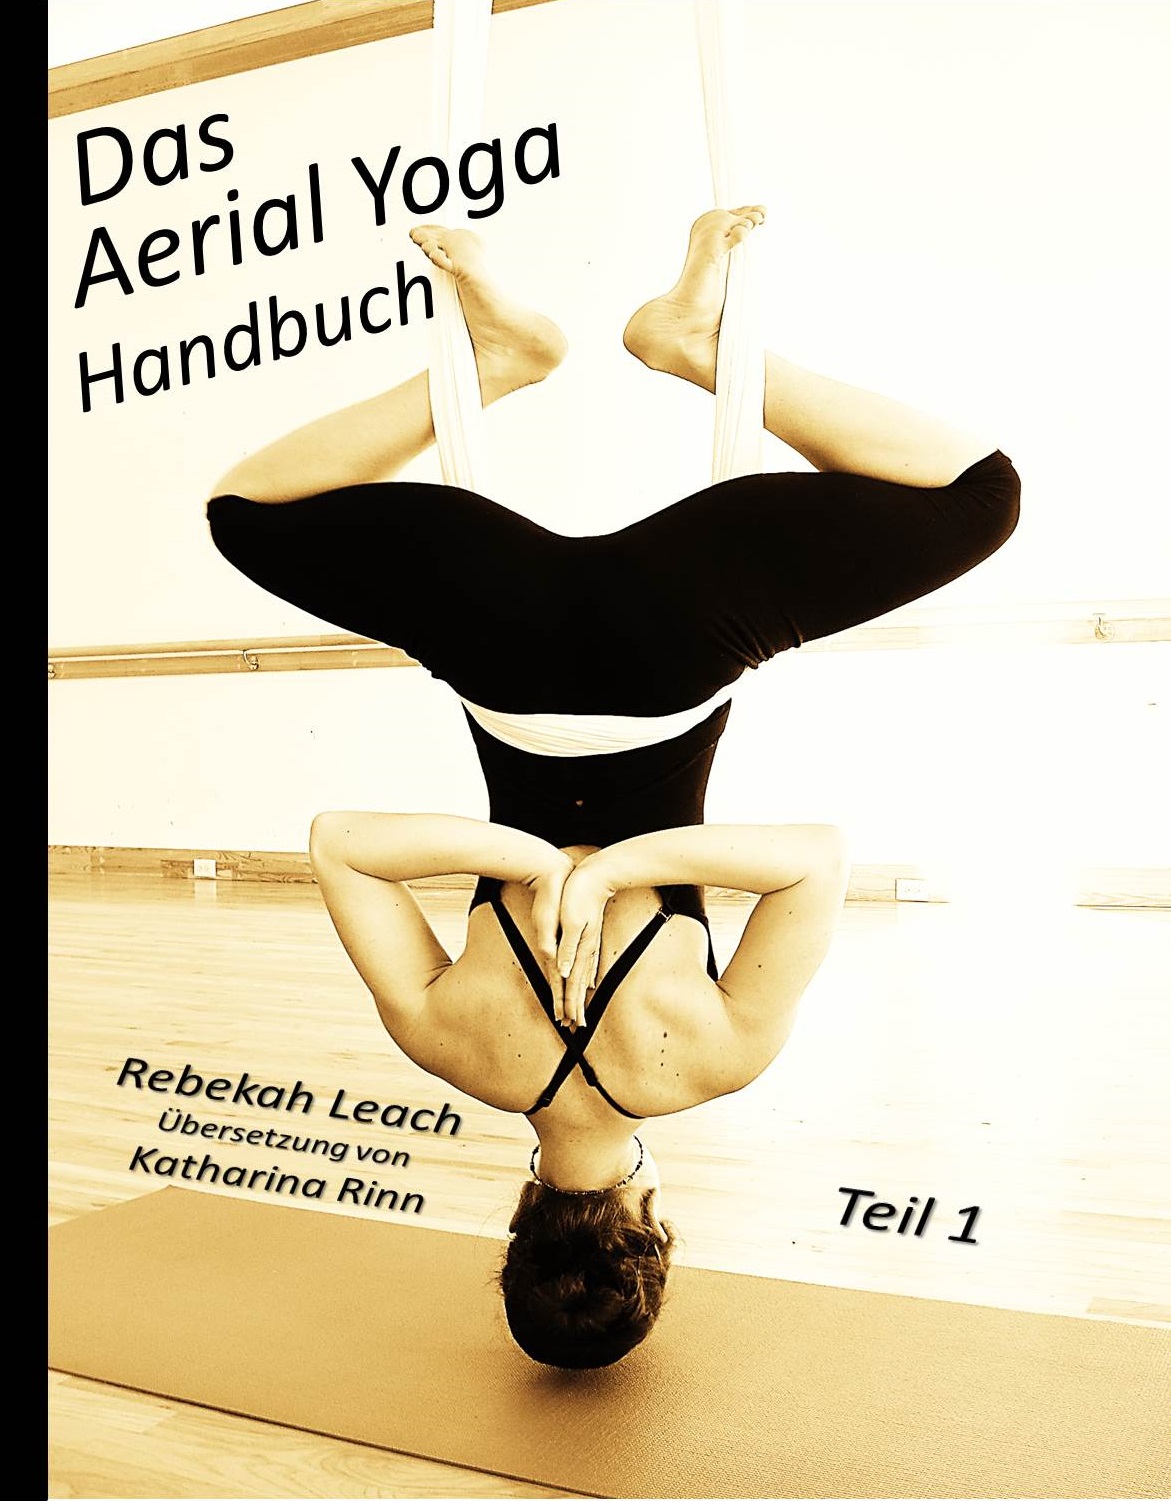 Das Aerial Yoga Handbuch Teil 1 is Here! www.aerialdancing photo photo pic